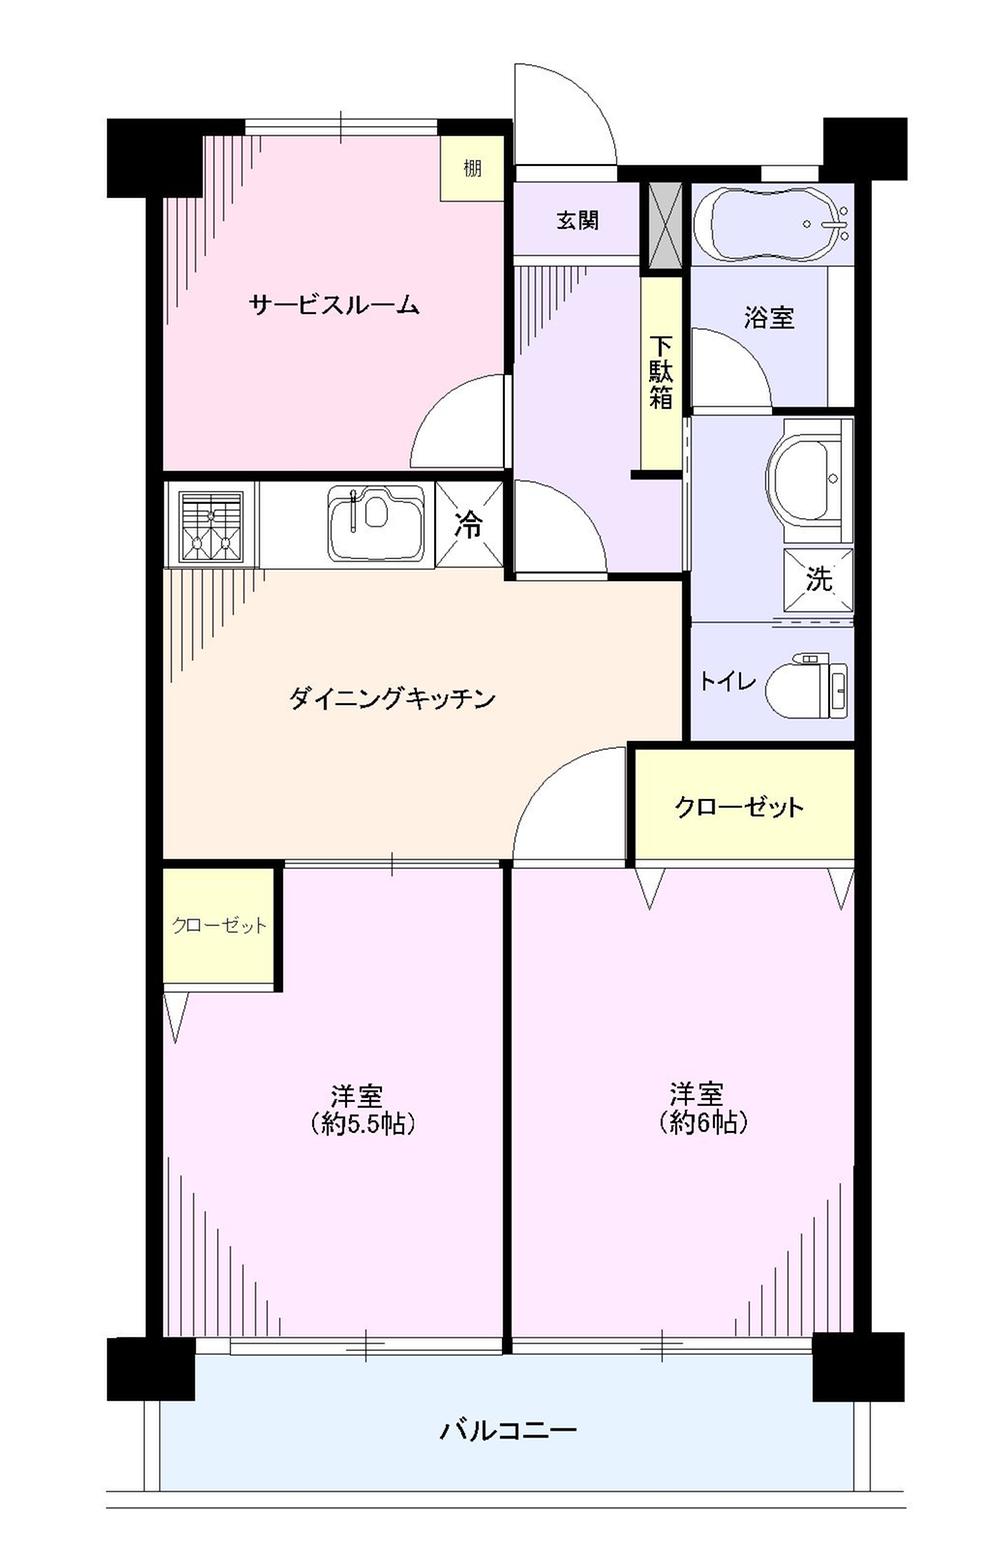 Floor plan. 2DK + S (storeroom), Price 15.8 million yen, Occupied area 50.12 sq m , Balcony area 7.58 sq m